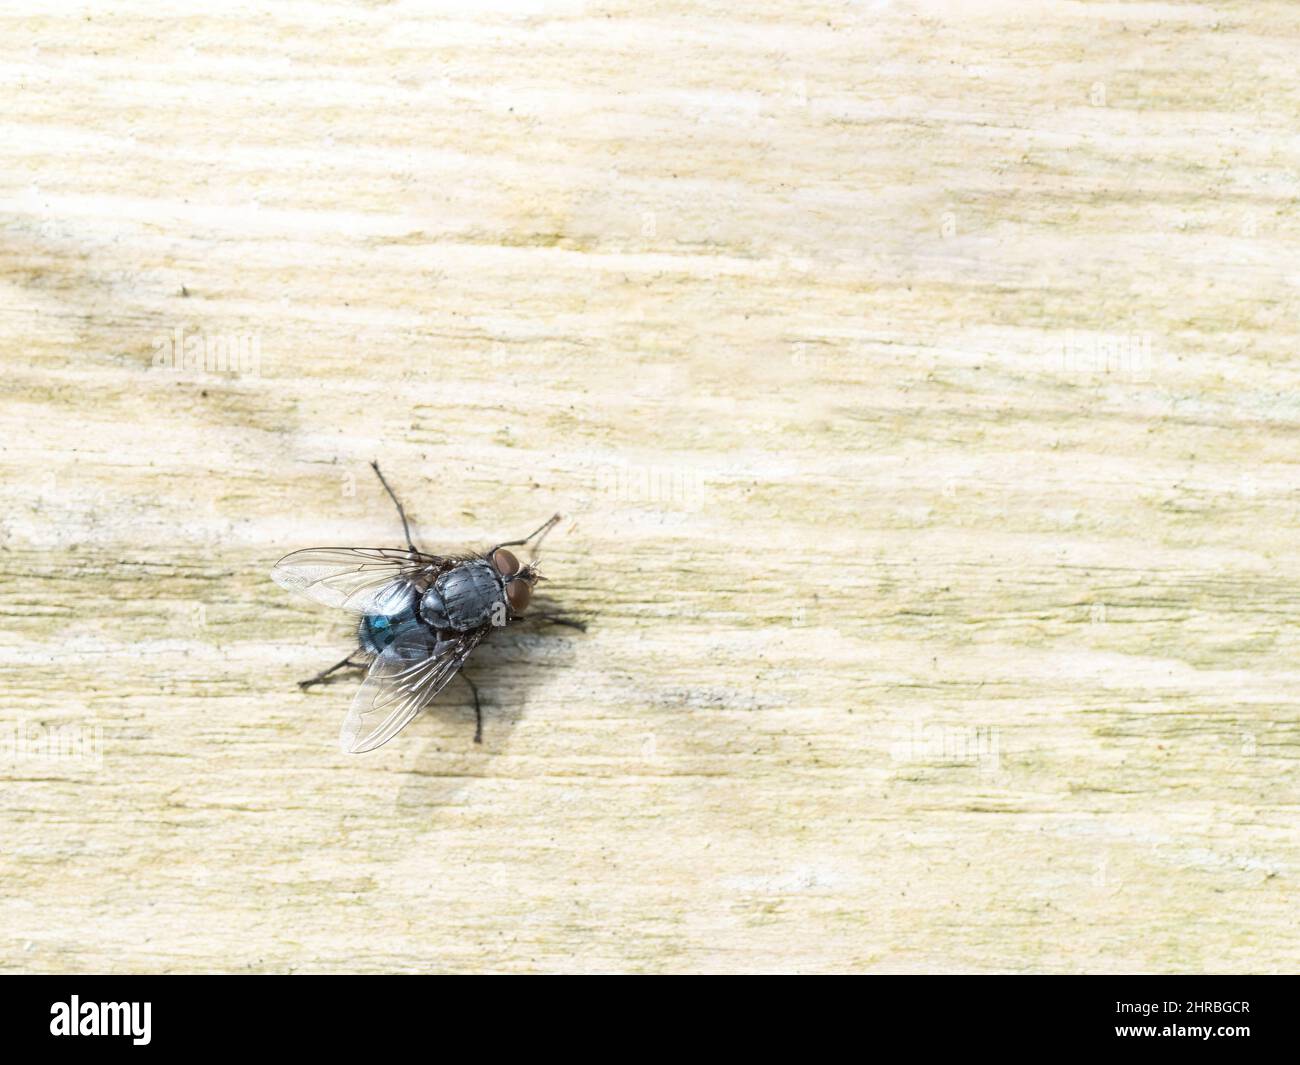 Bluebottle fly warming itself in winter February sun, on fence, UK. Calliphora. Stock Photo